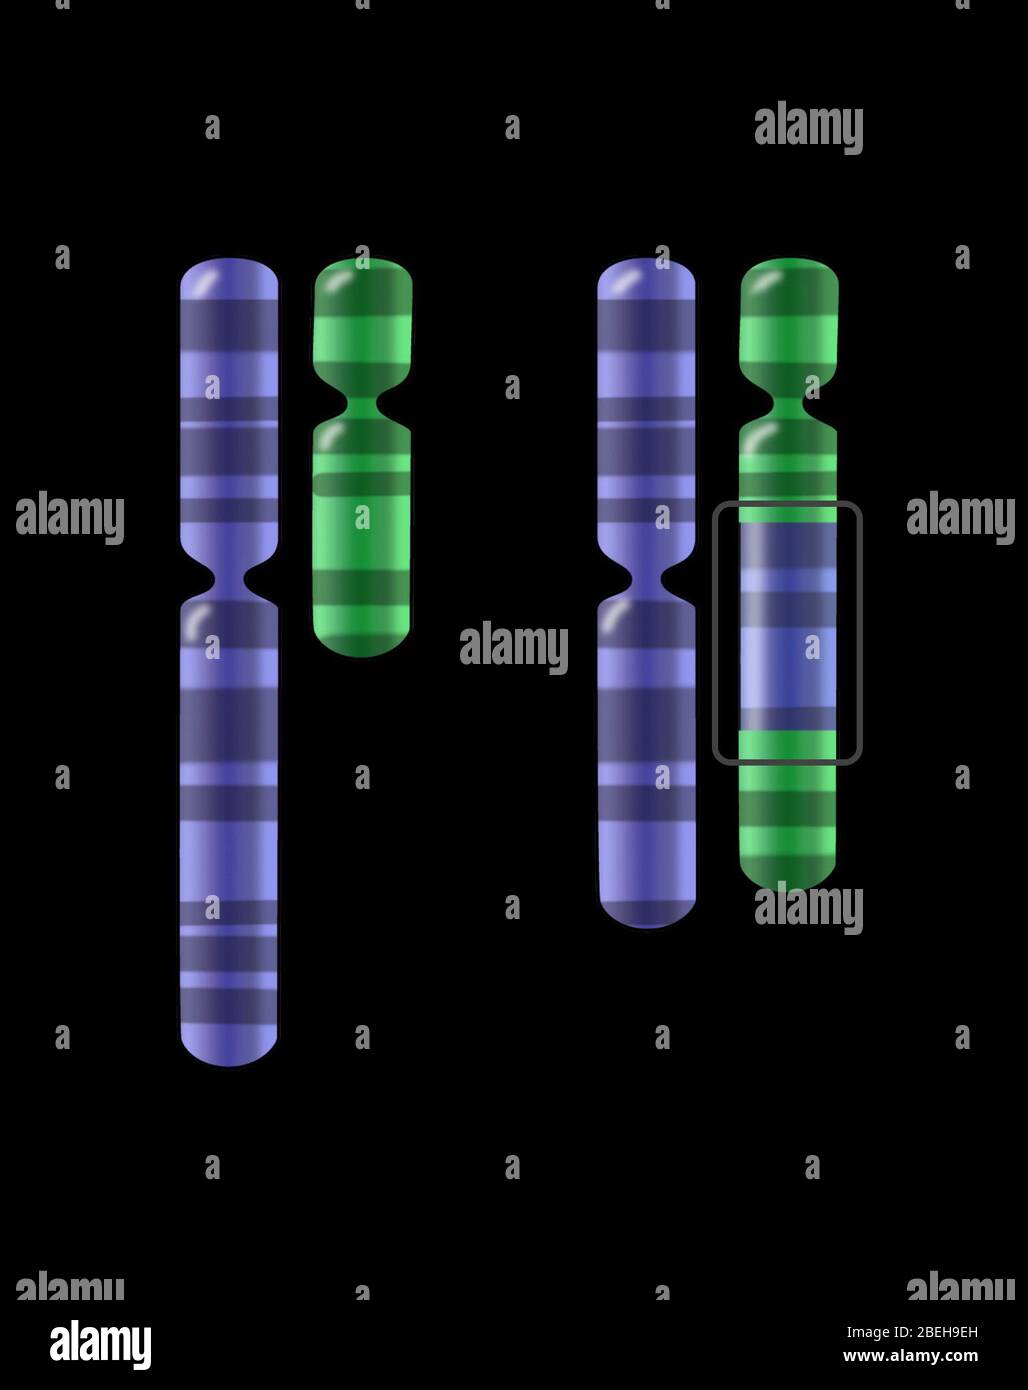 Chromosomeneinfügung, Abbildung Stockfoto